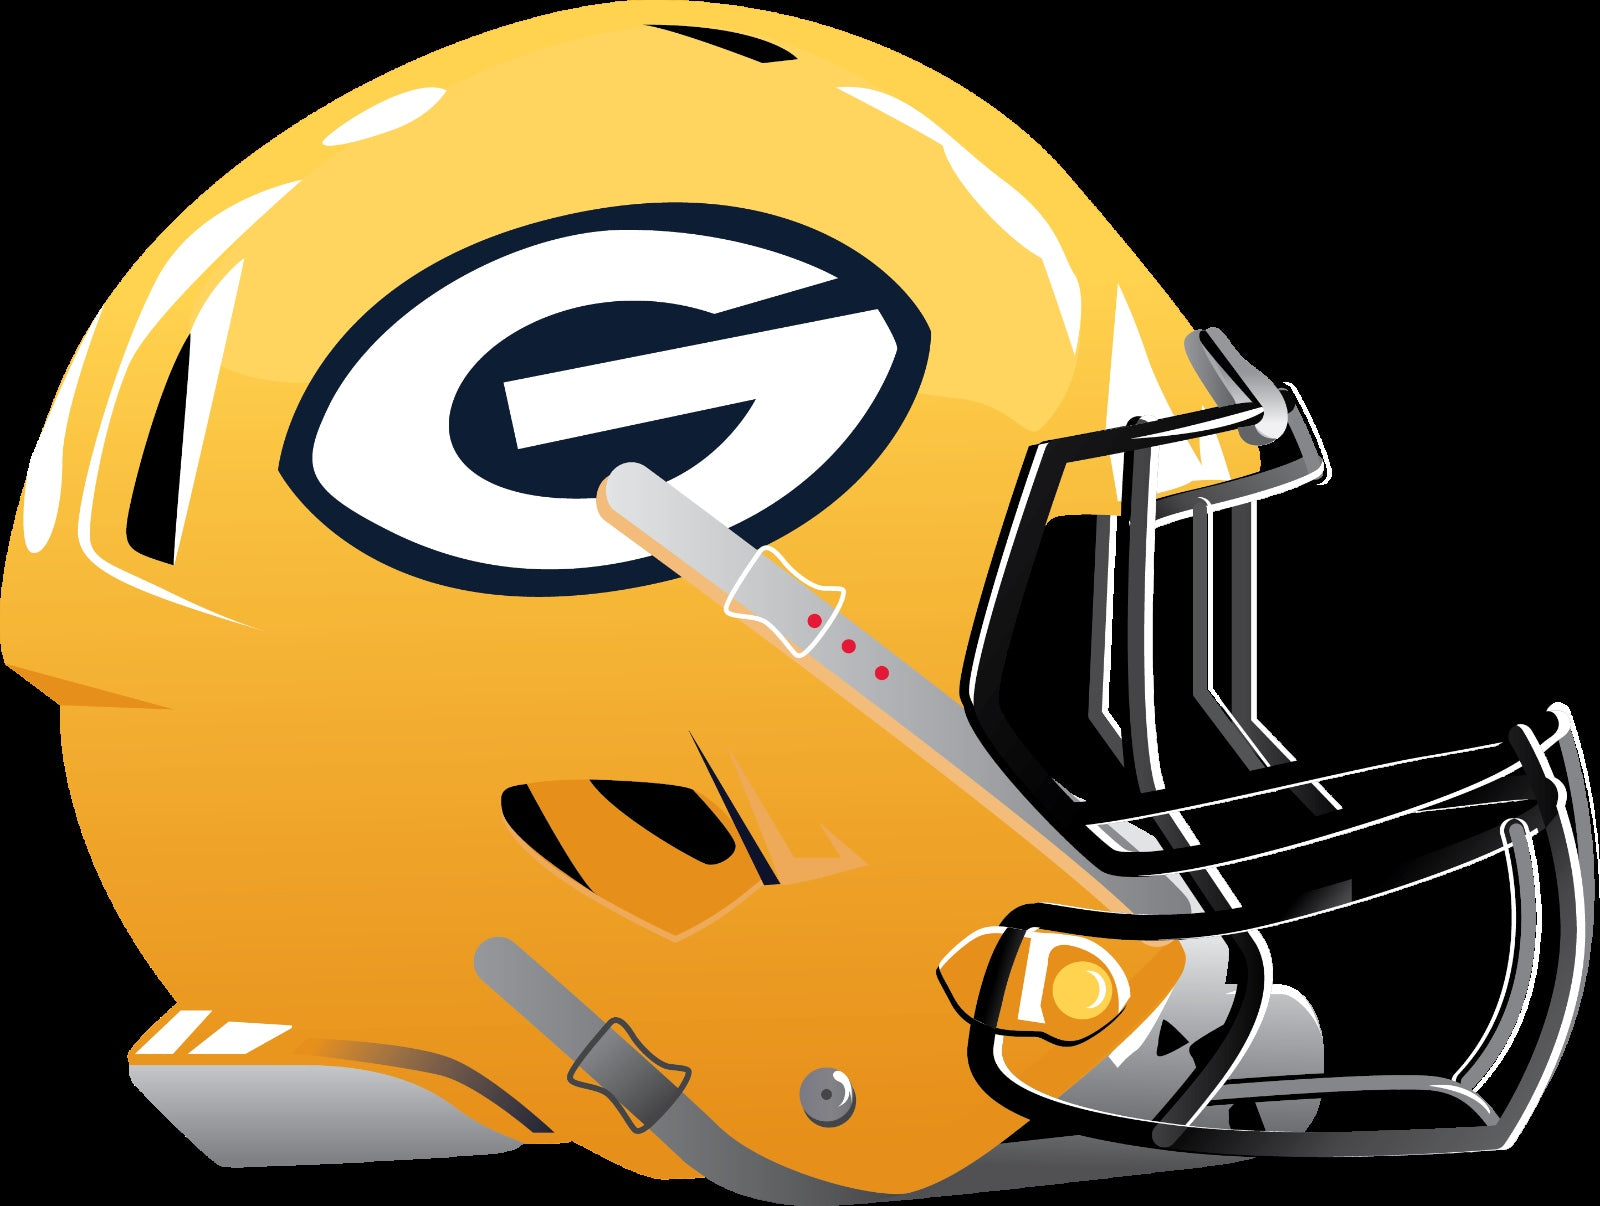 Green Bay Packers Alternate Future Helmet logo Vinyl Decal / Sticker 5